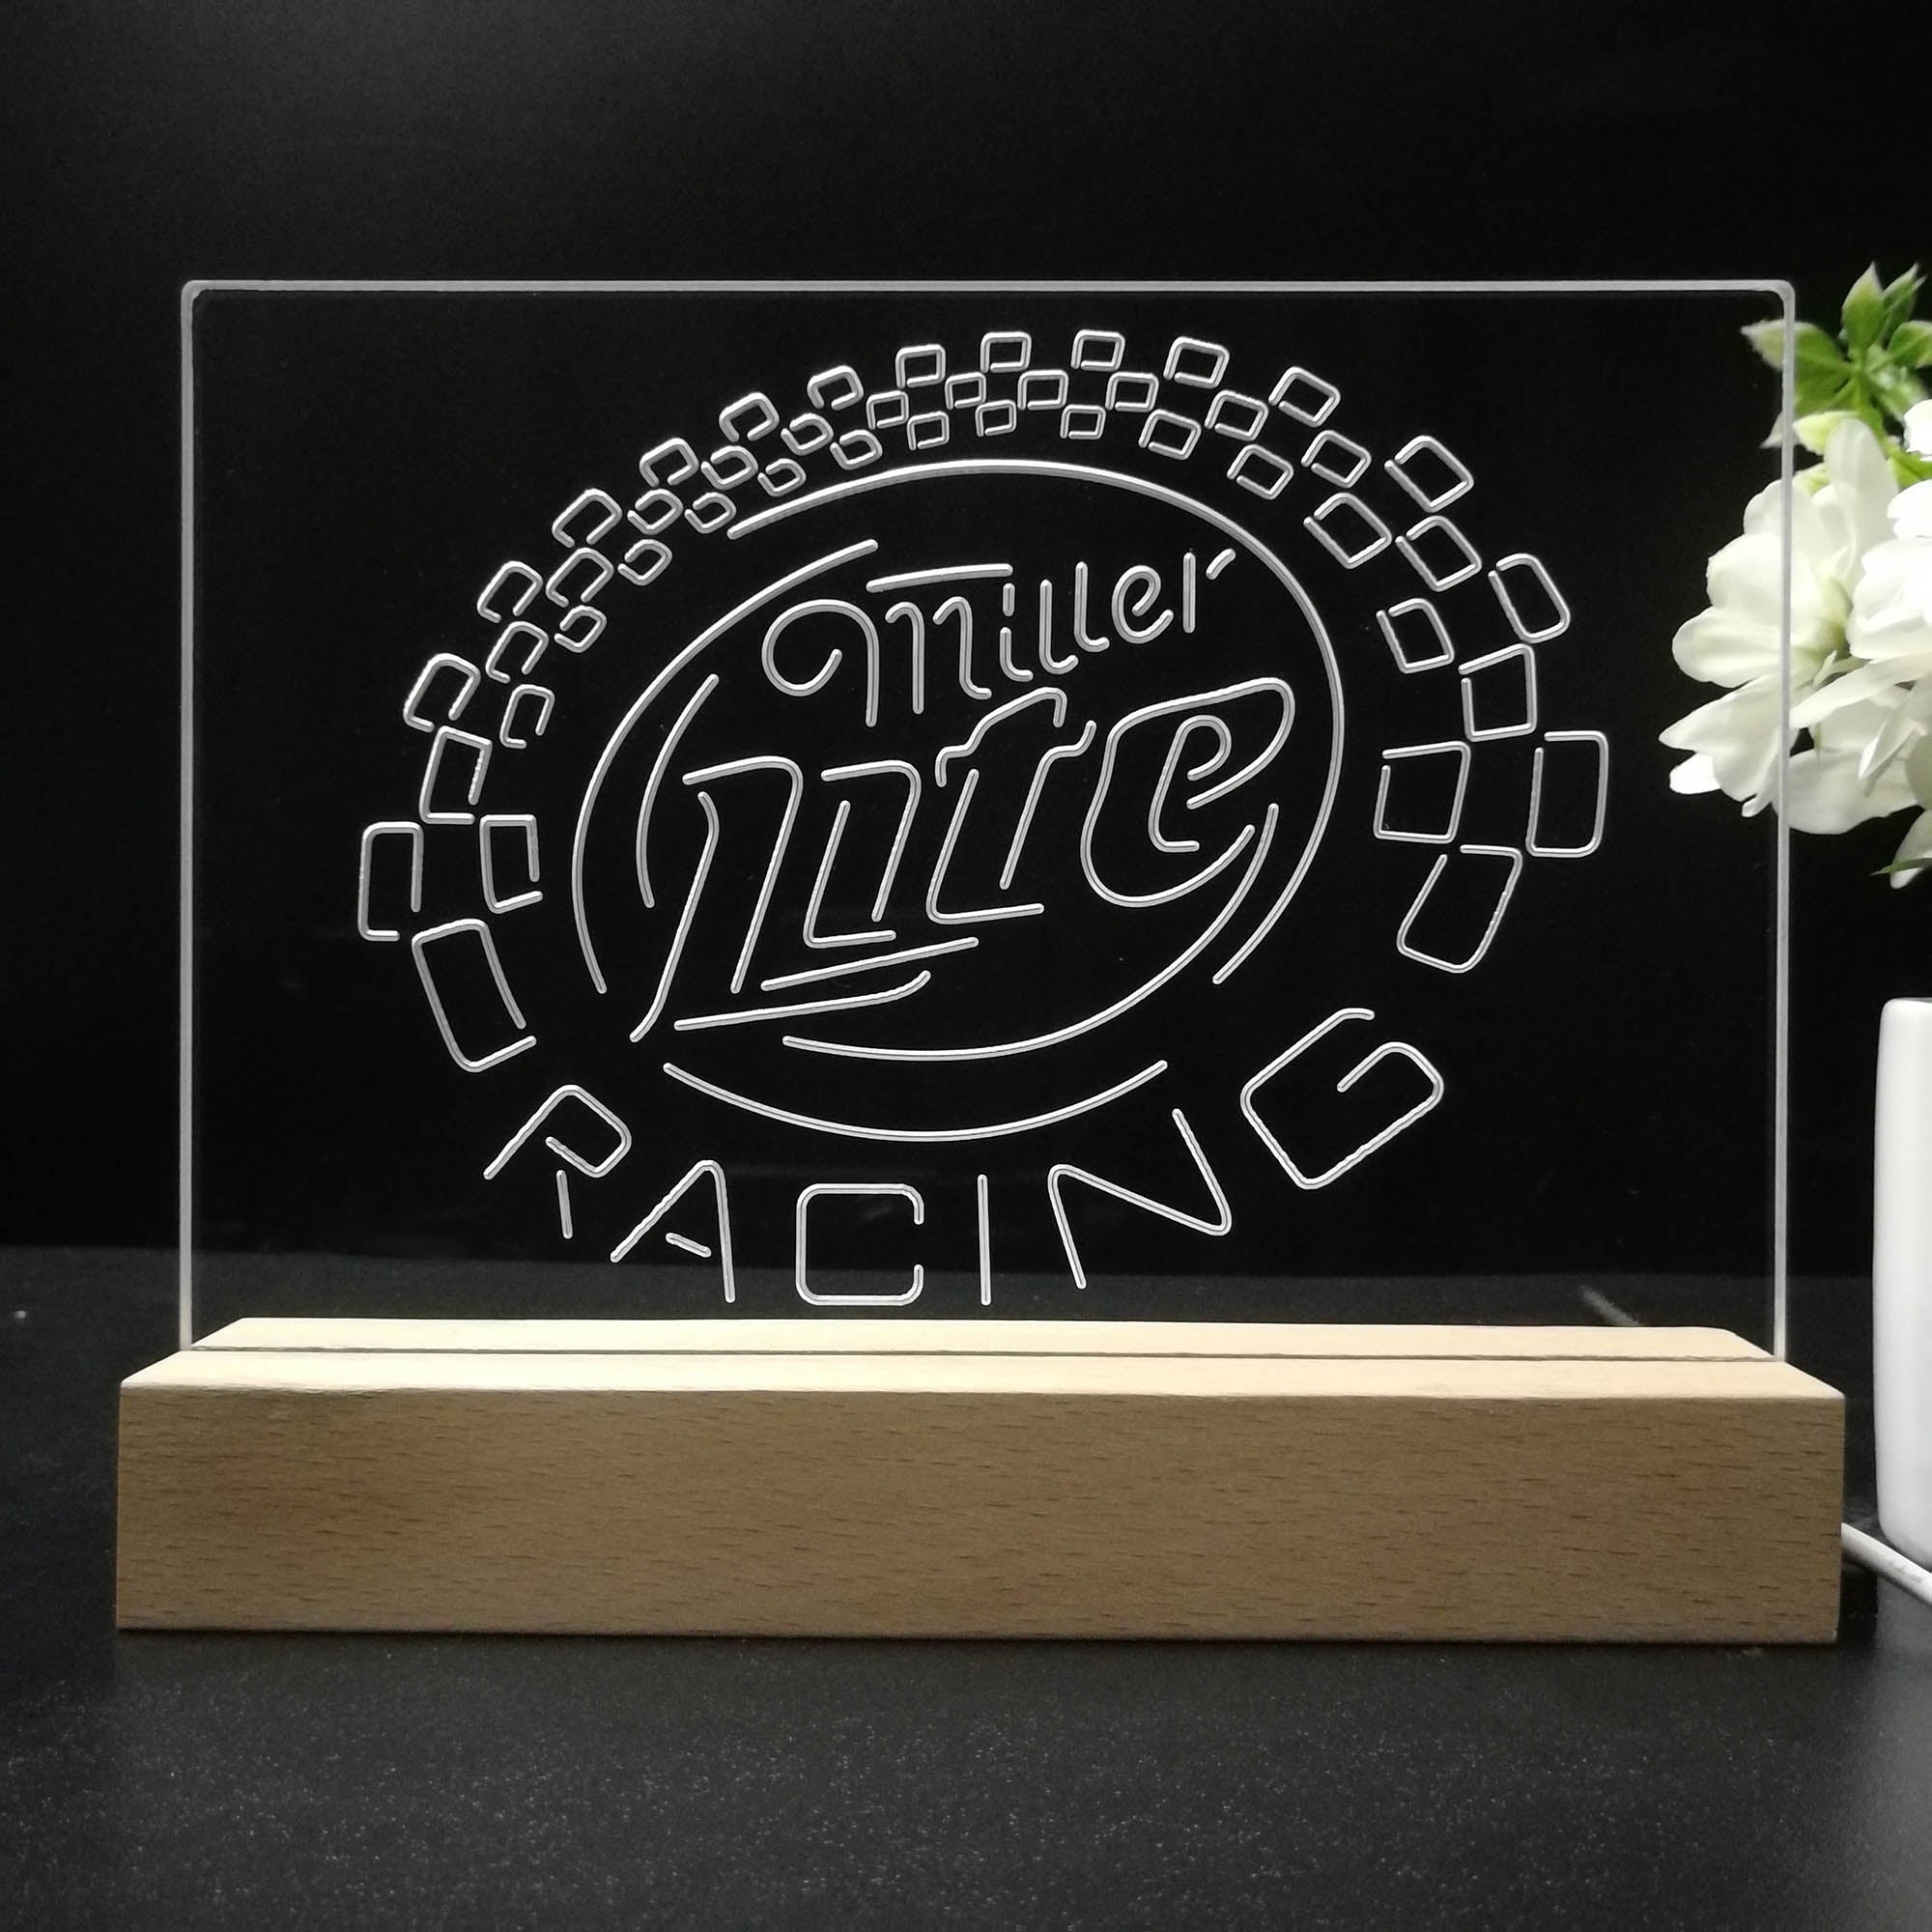 Miller Lite Racing Car 3D Illusion Night Light Desk Lamp